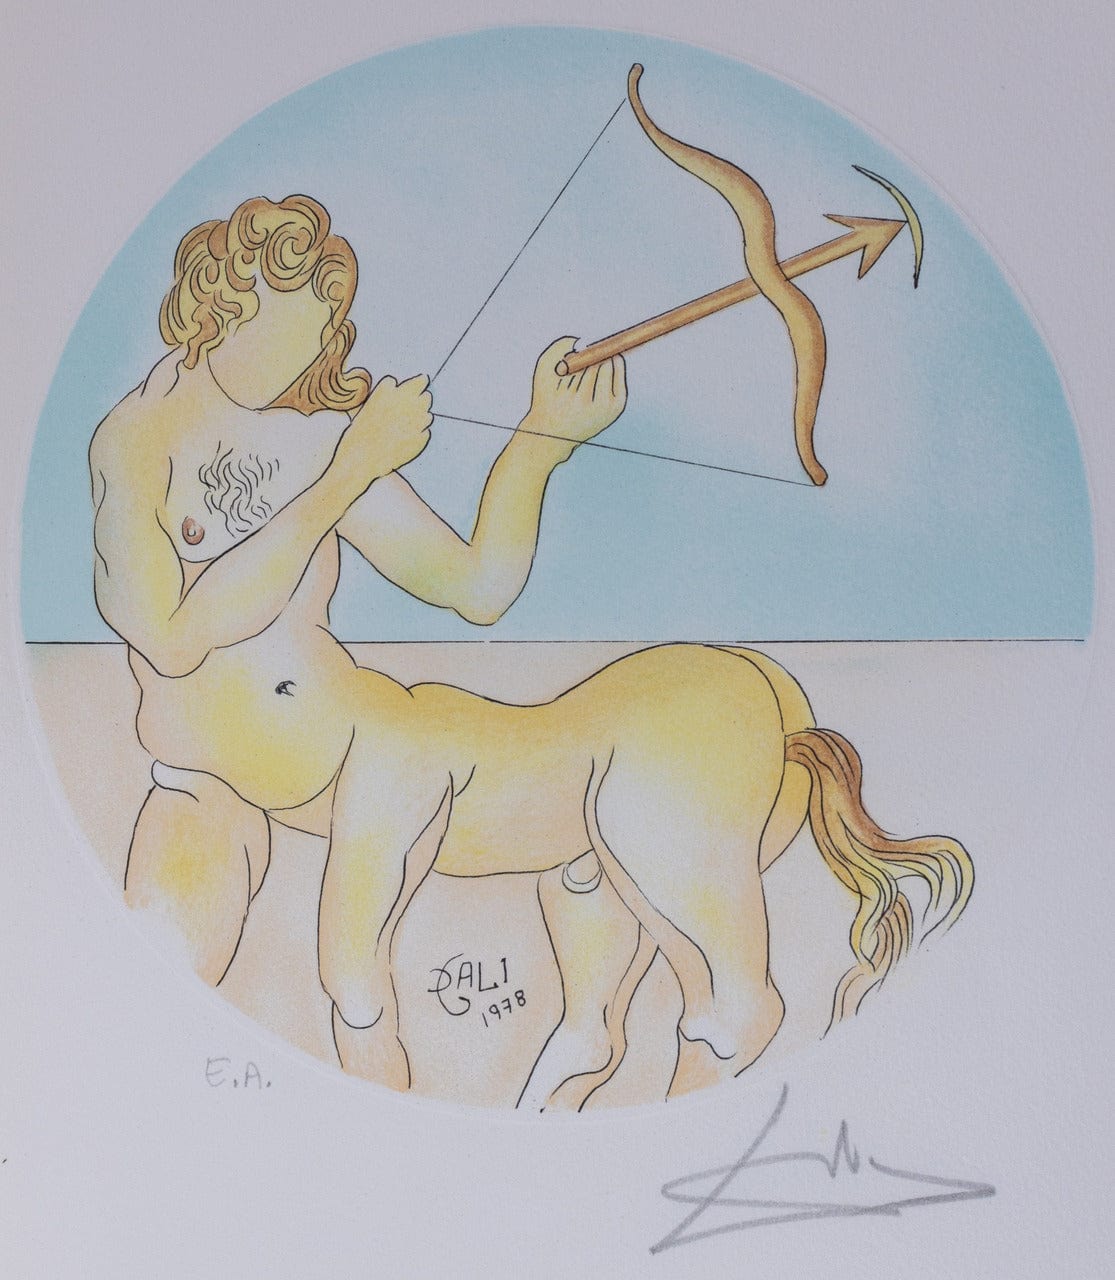 Salvador Dali; "Sagittarius" - Zodiac Suite Front